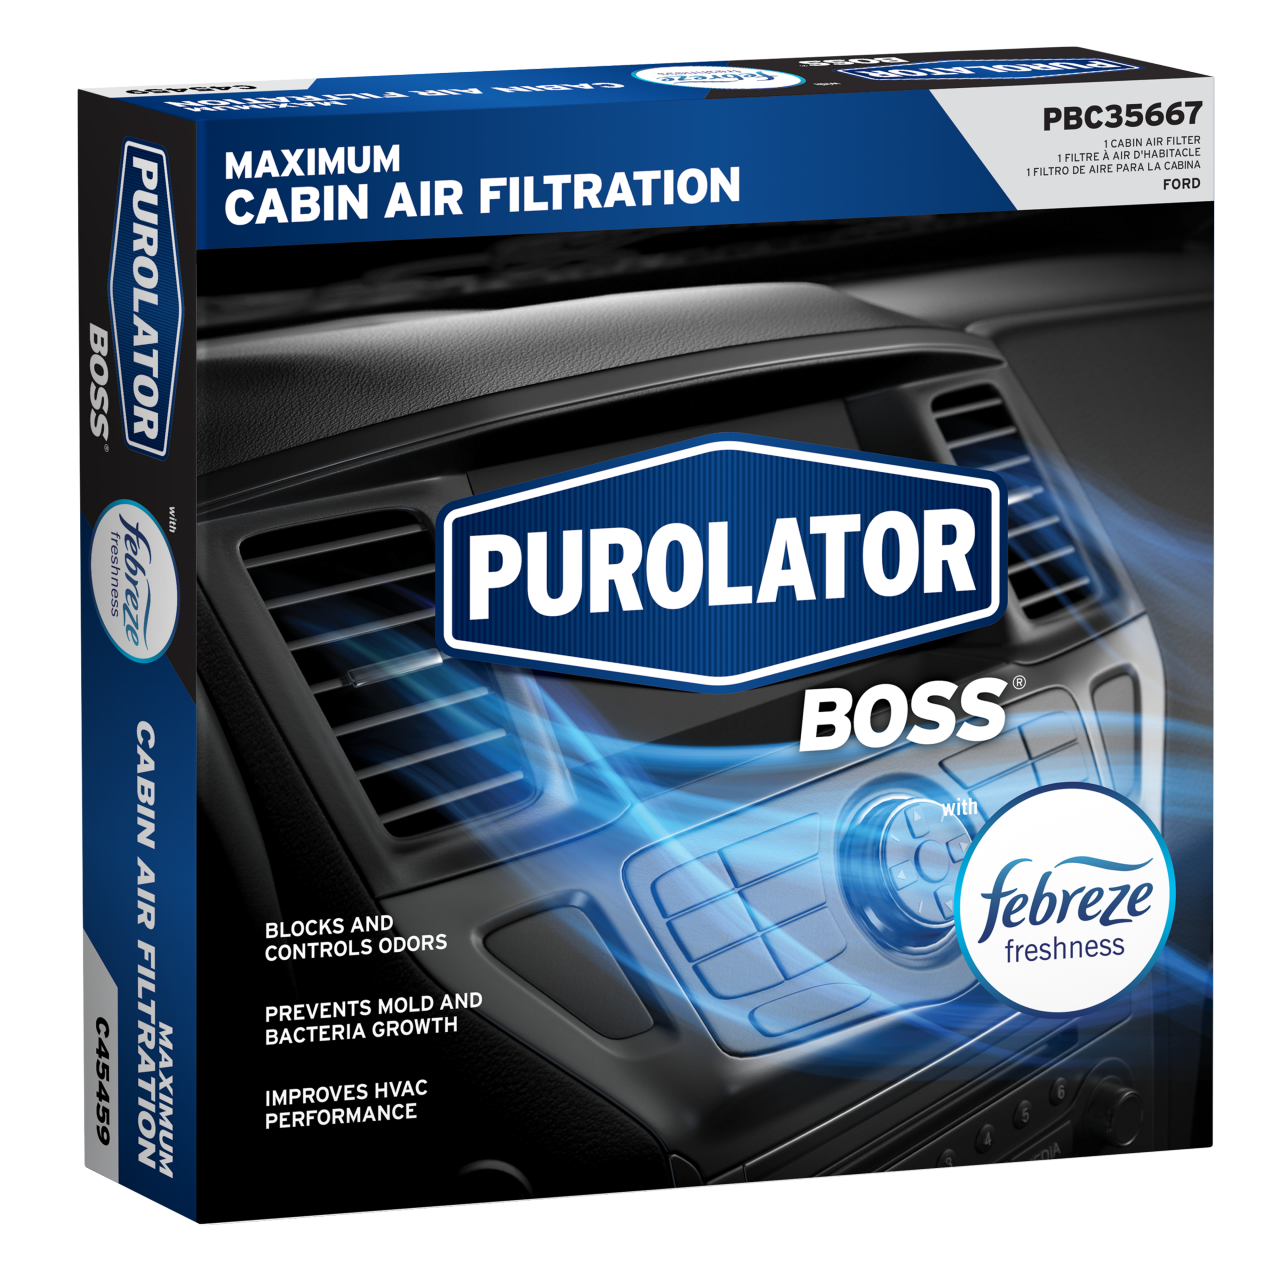 PurolatorBOSS® Maximum Cabin Air Filters with Febreze Freshness block and control harmful contaminants.